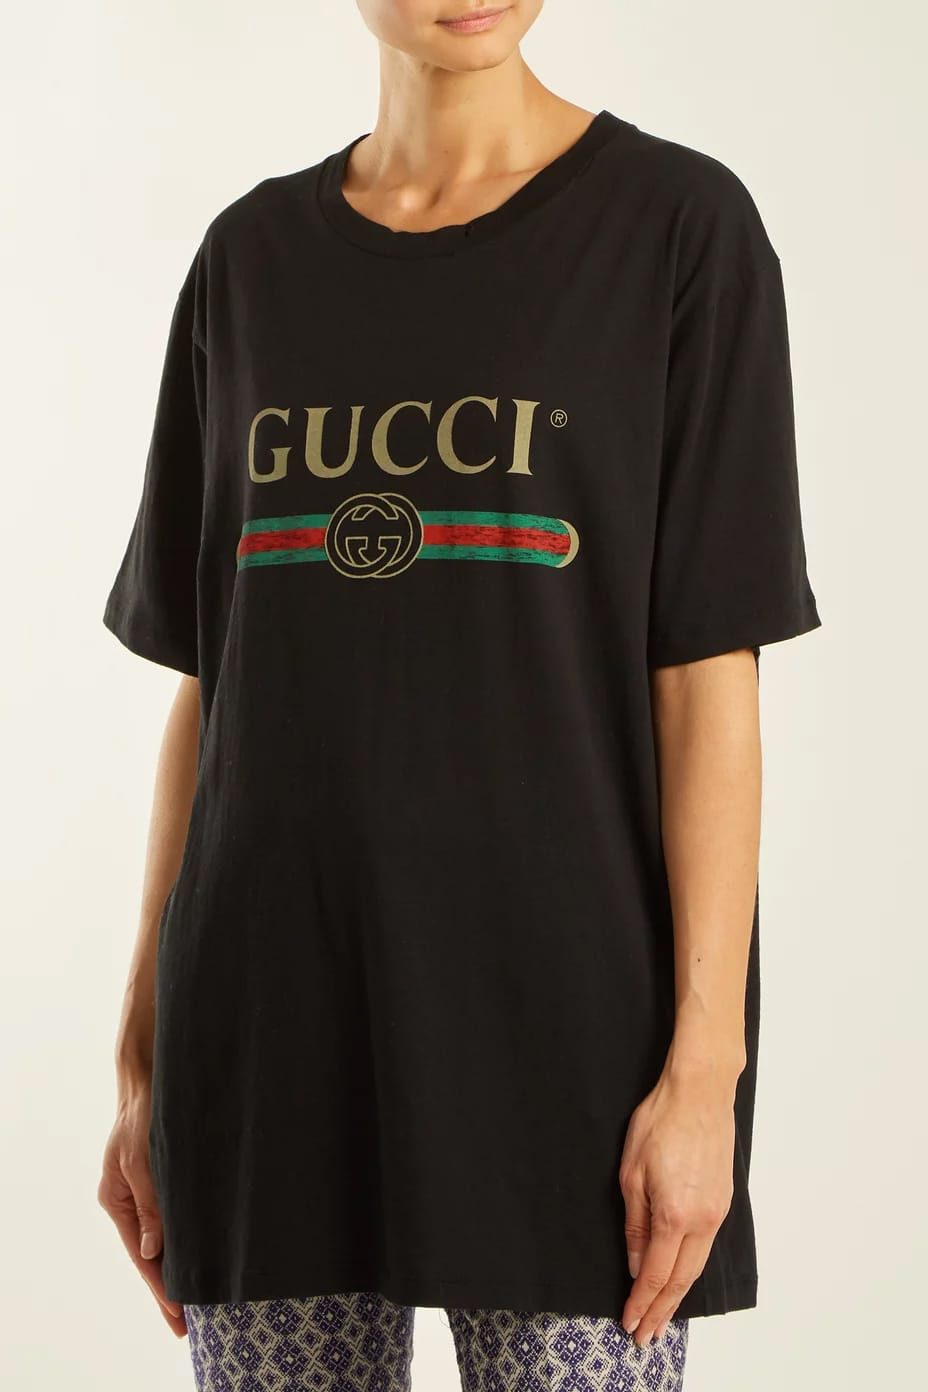 vintage gucci logo t shirt